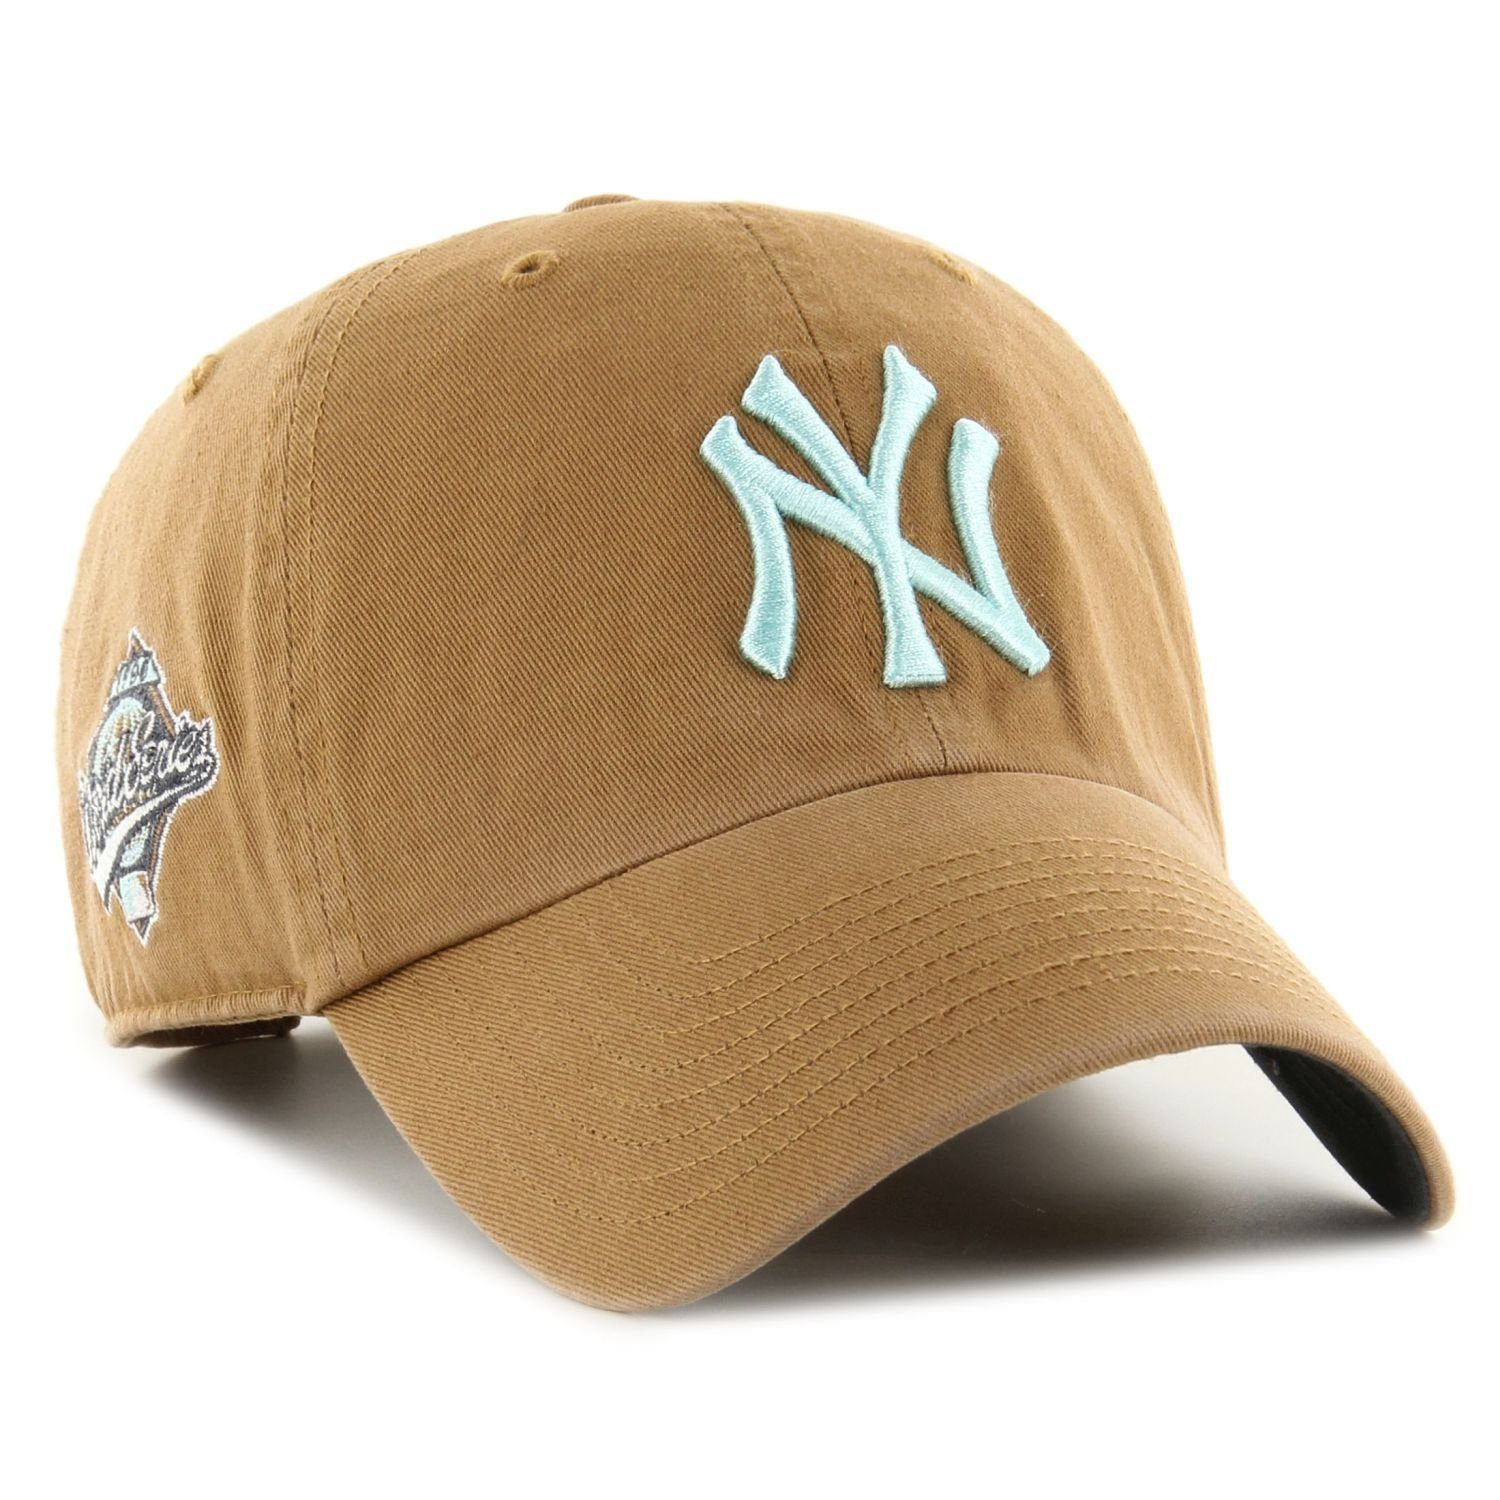 '47 Brand Baseball Cap Strapback WORLD SERIES New York Yankees